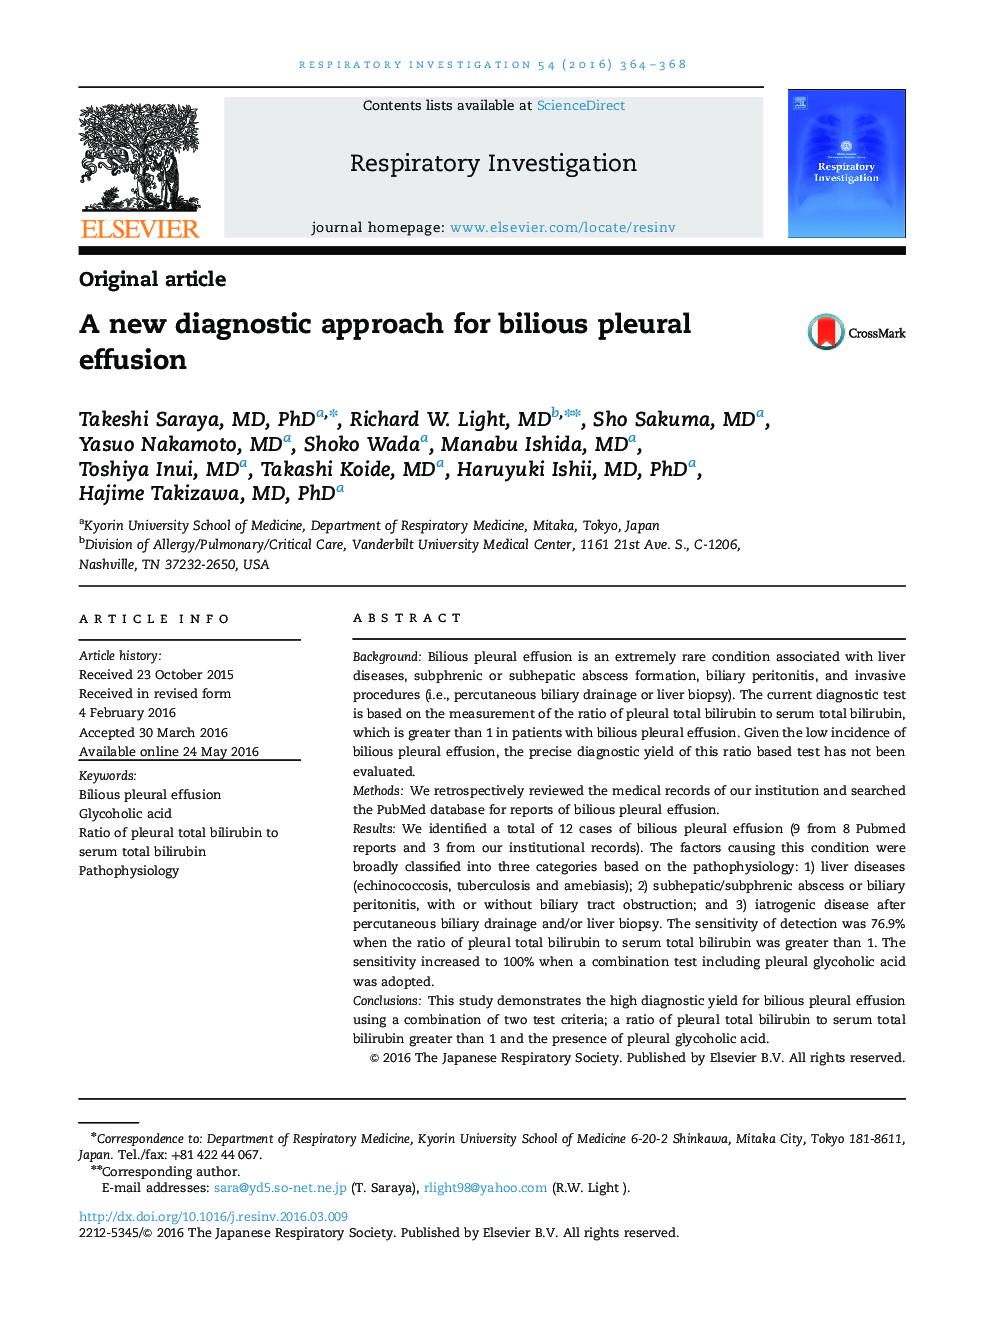 A new diagnostic approach for bilious pleural effusion